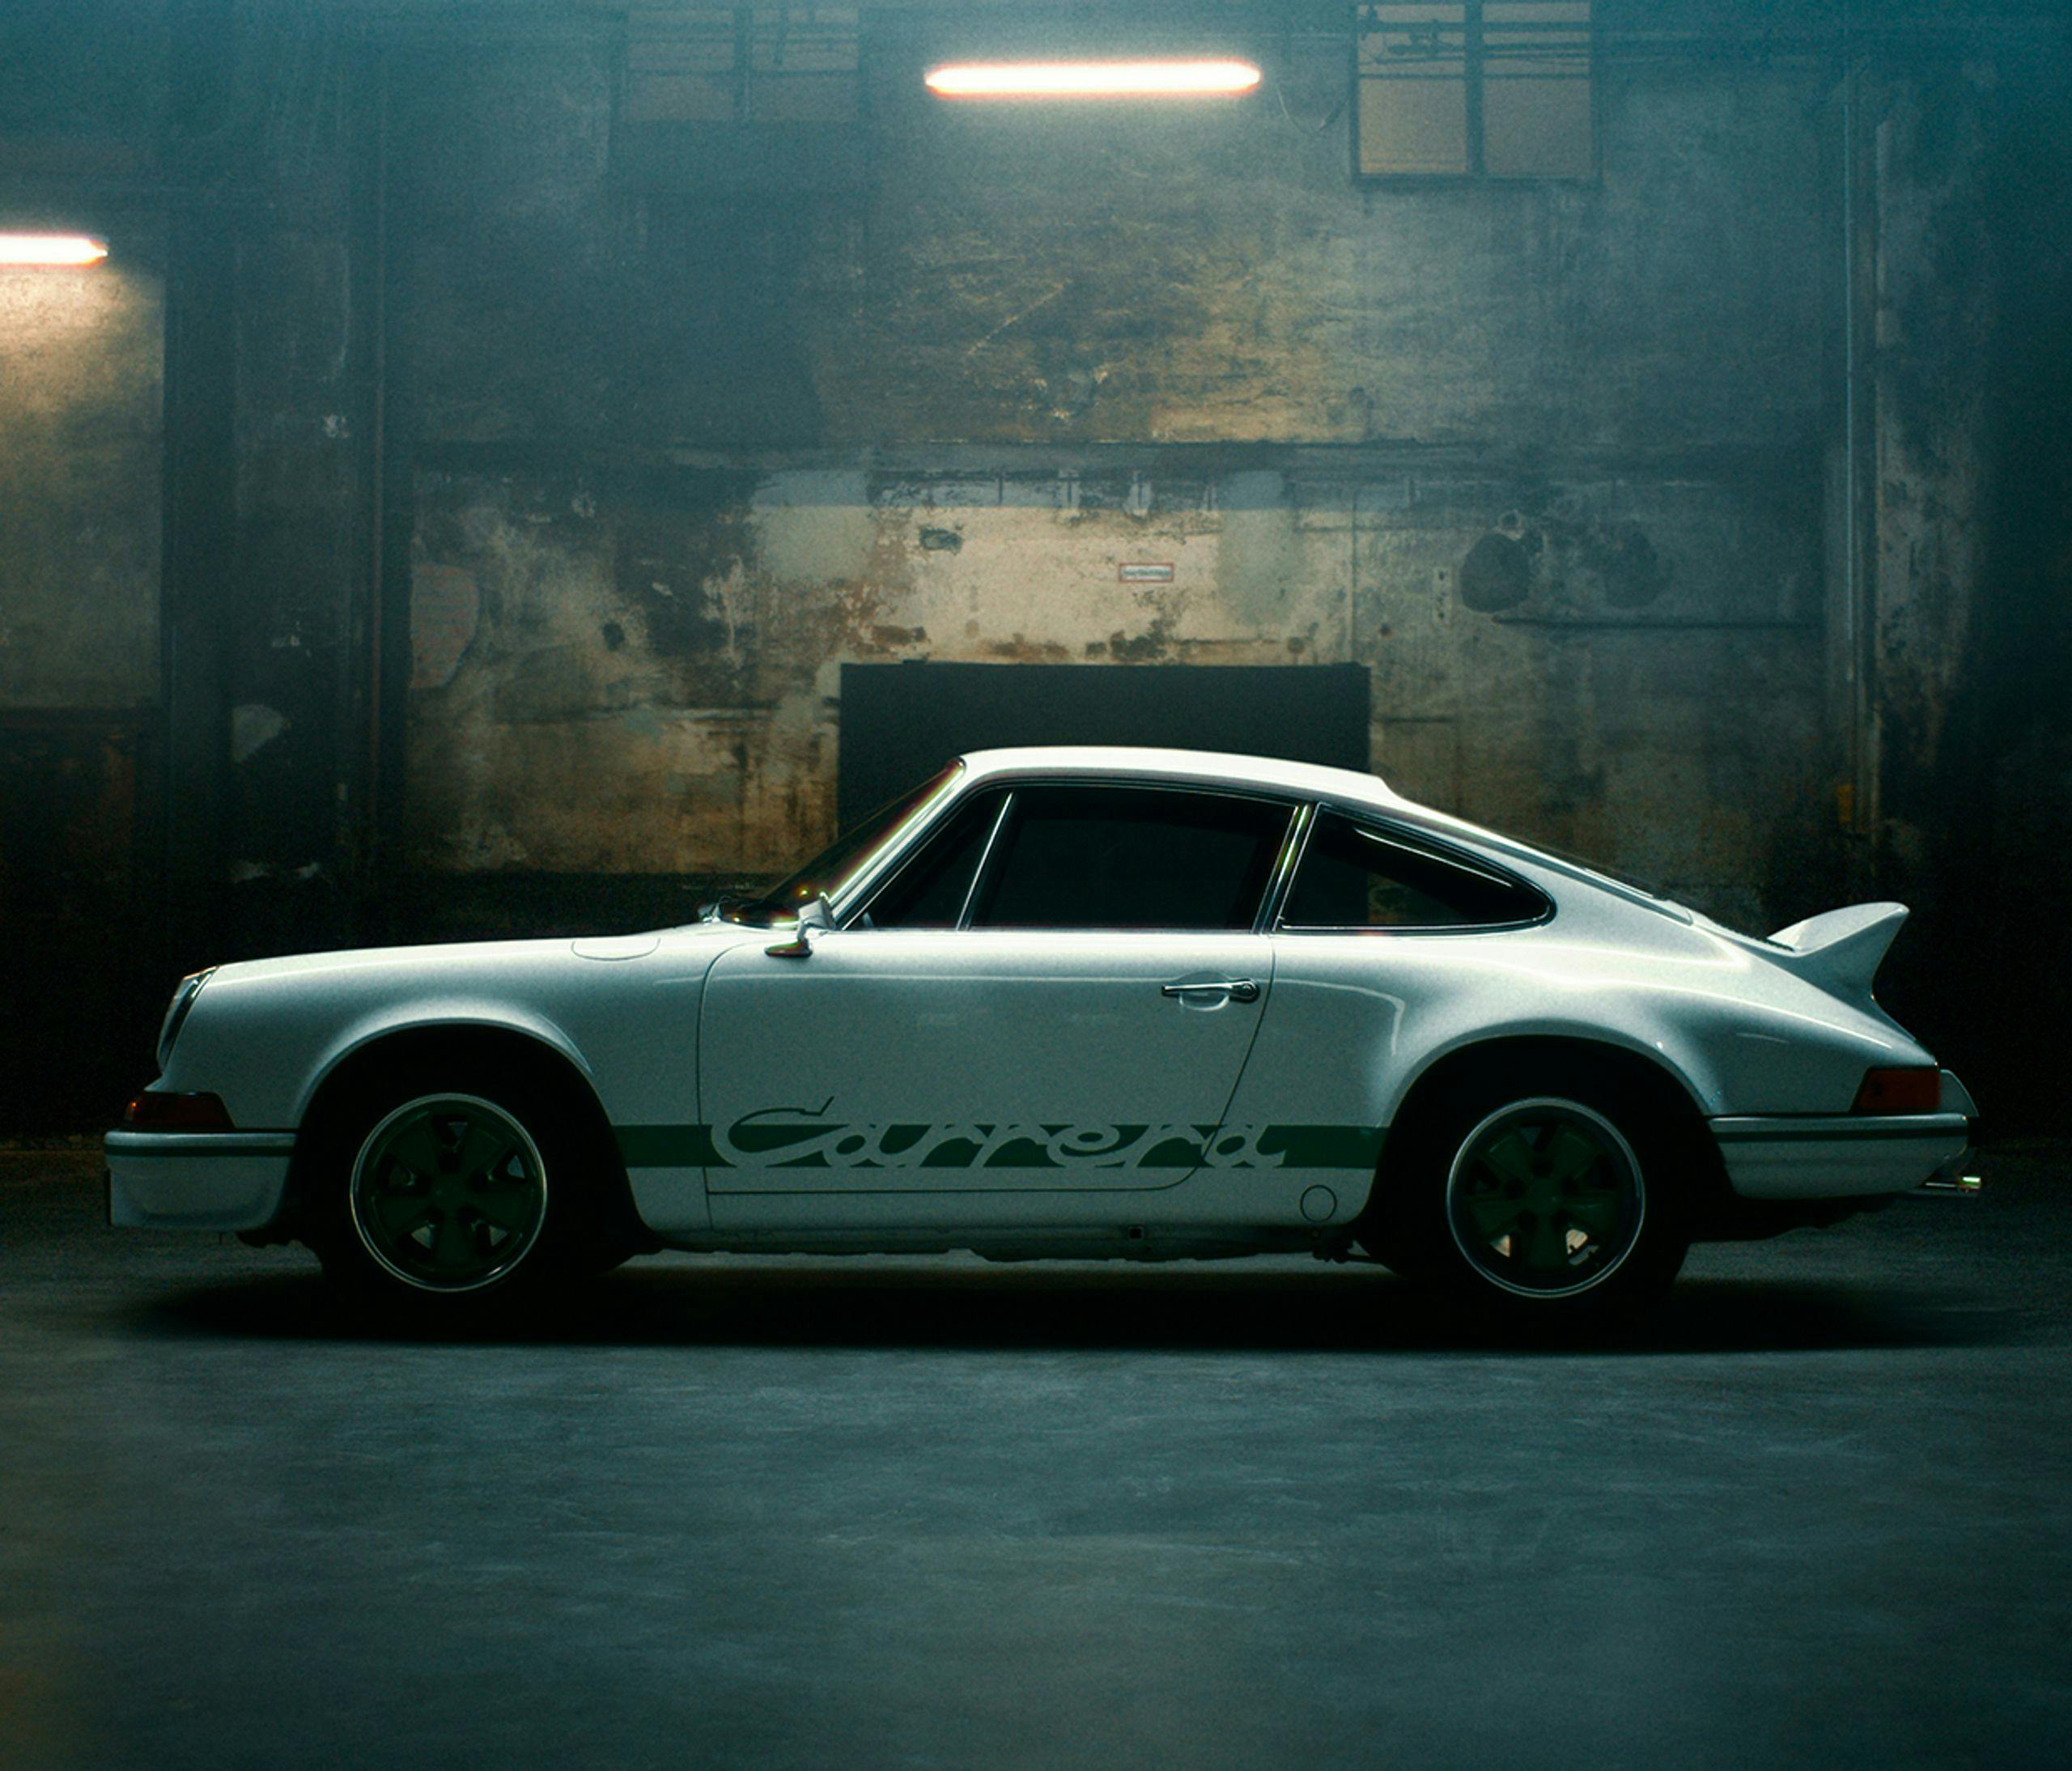 Discover the Porsche brand story